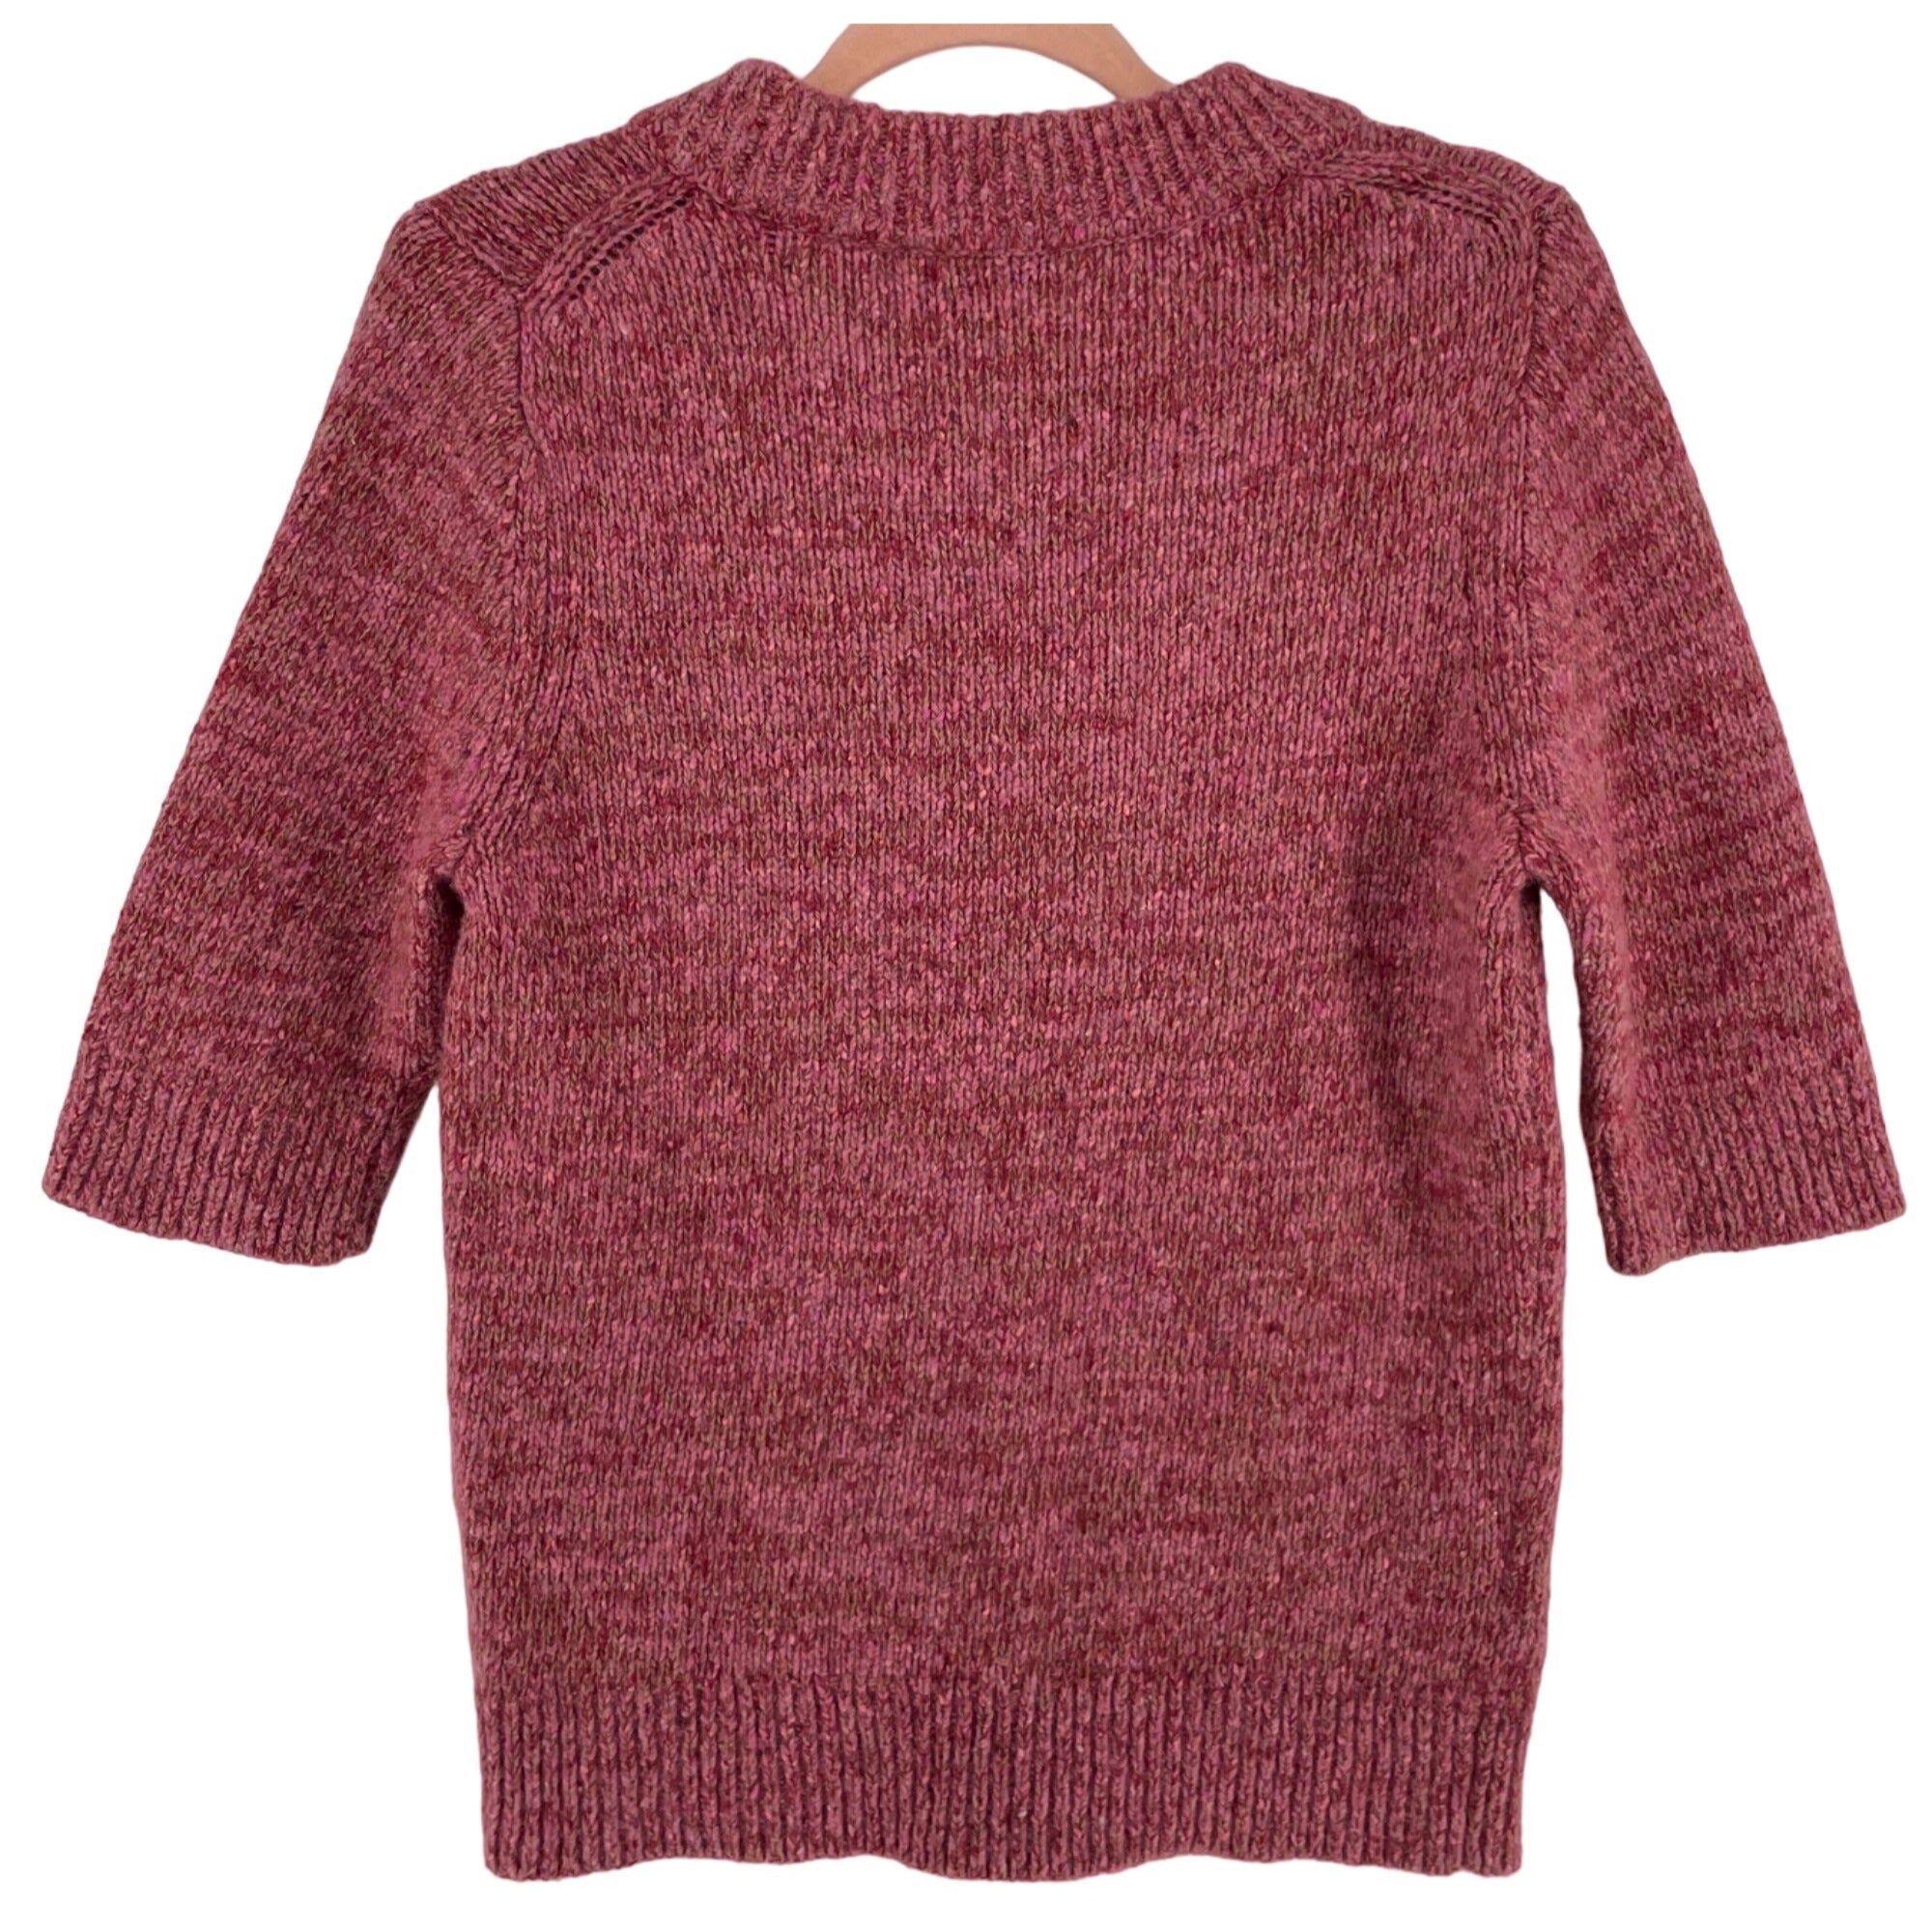 Ann Taylor Women's Size Large Mauve Pink Knit Wool Blend Sweater